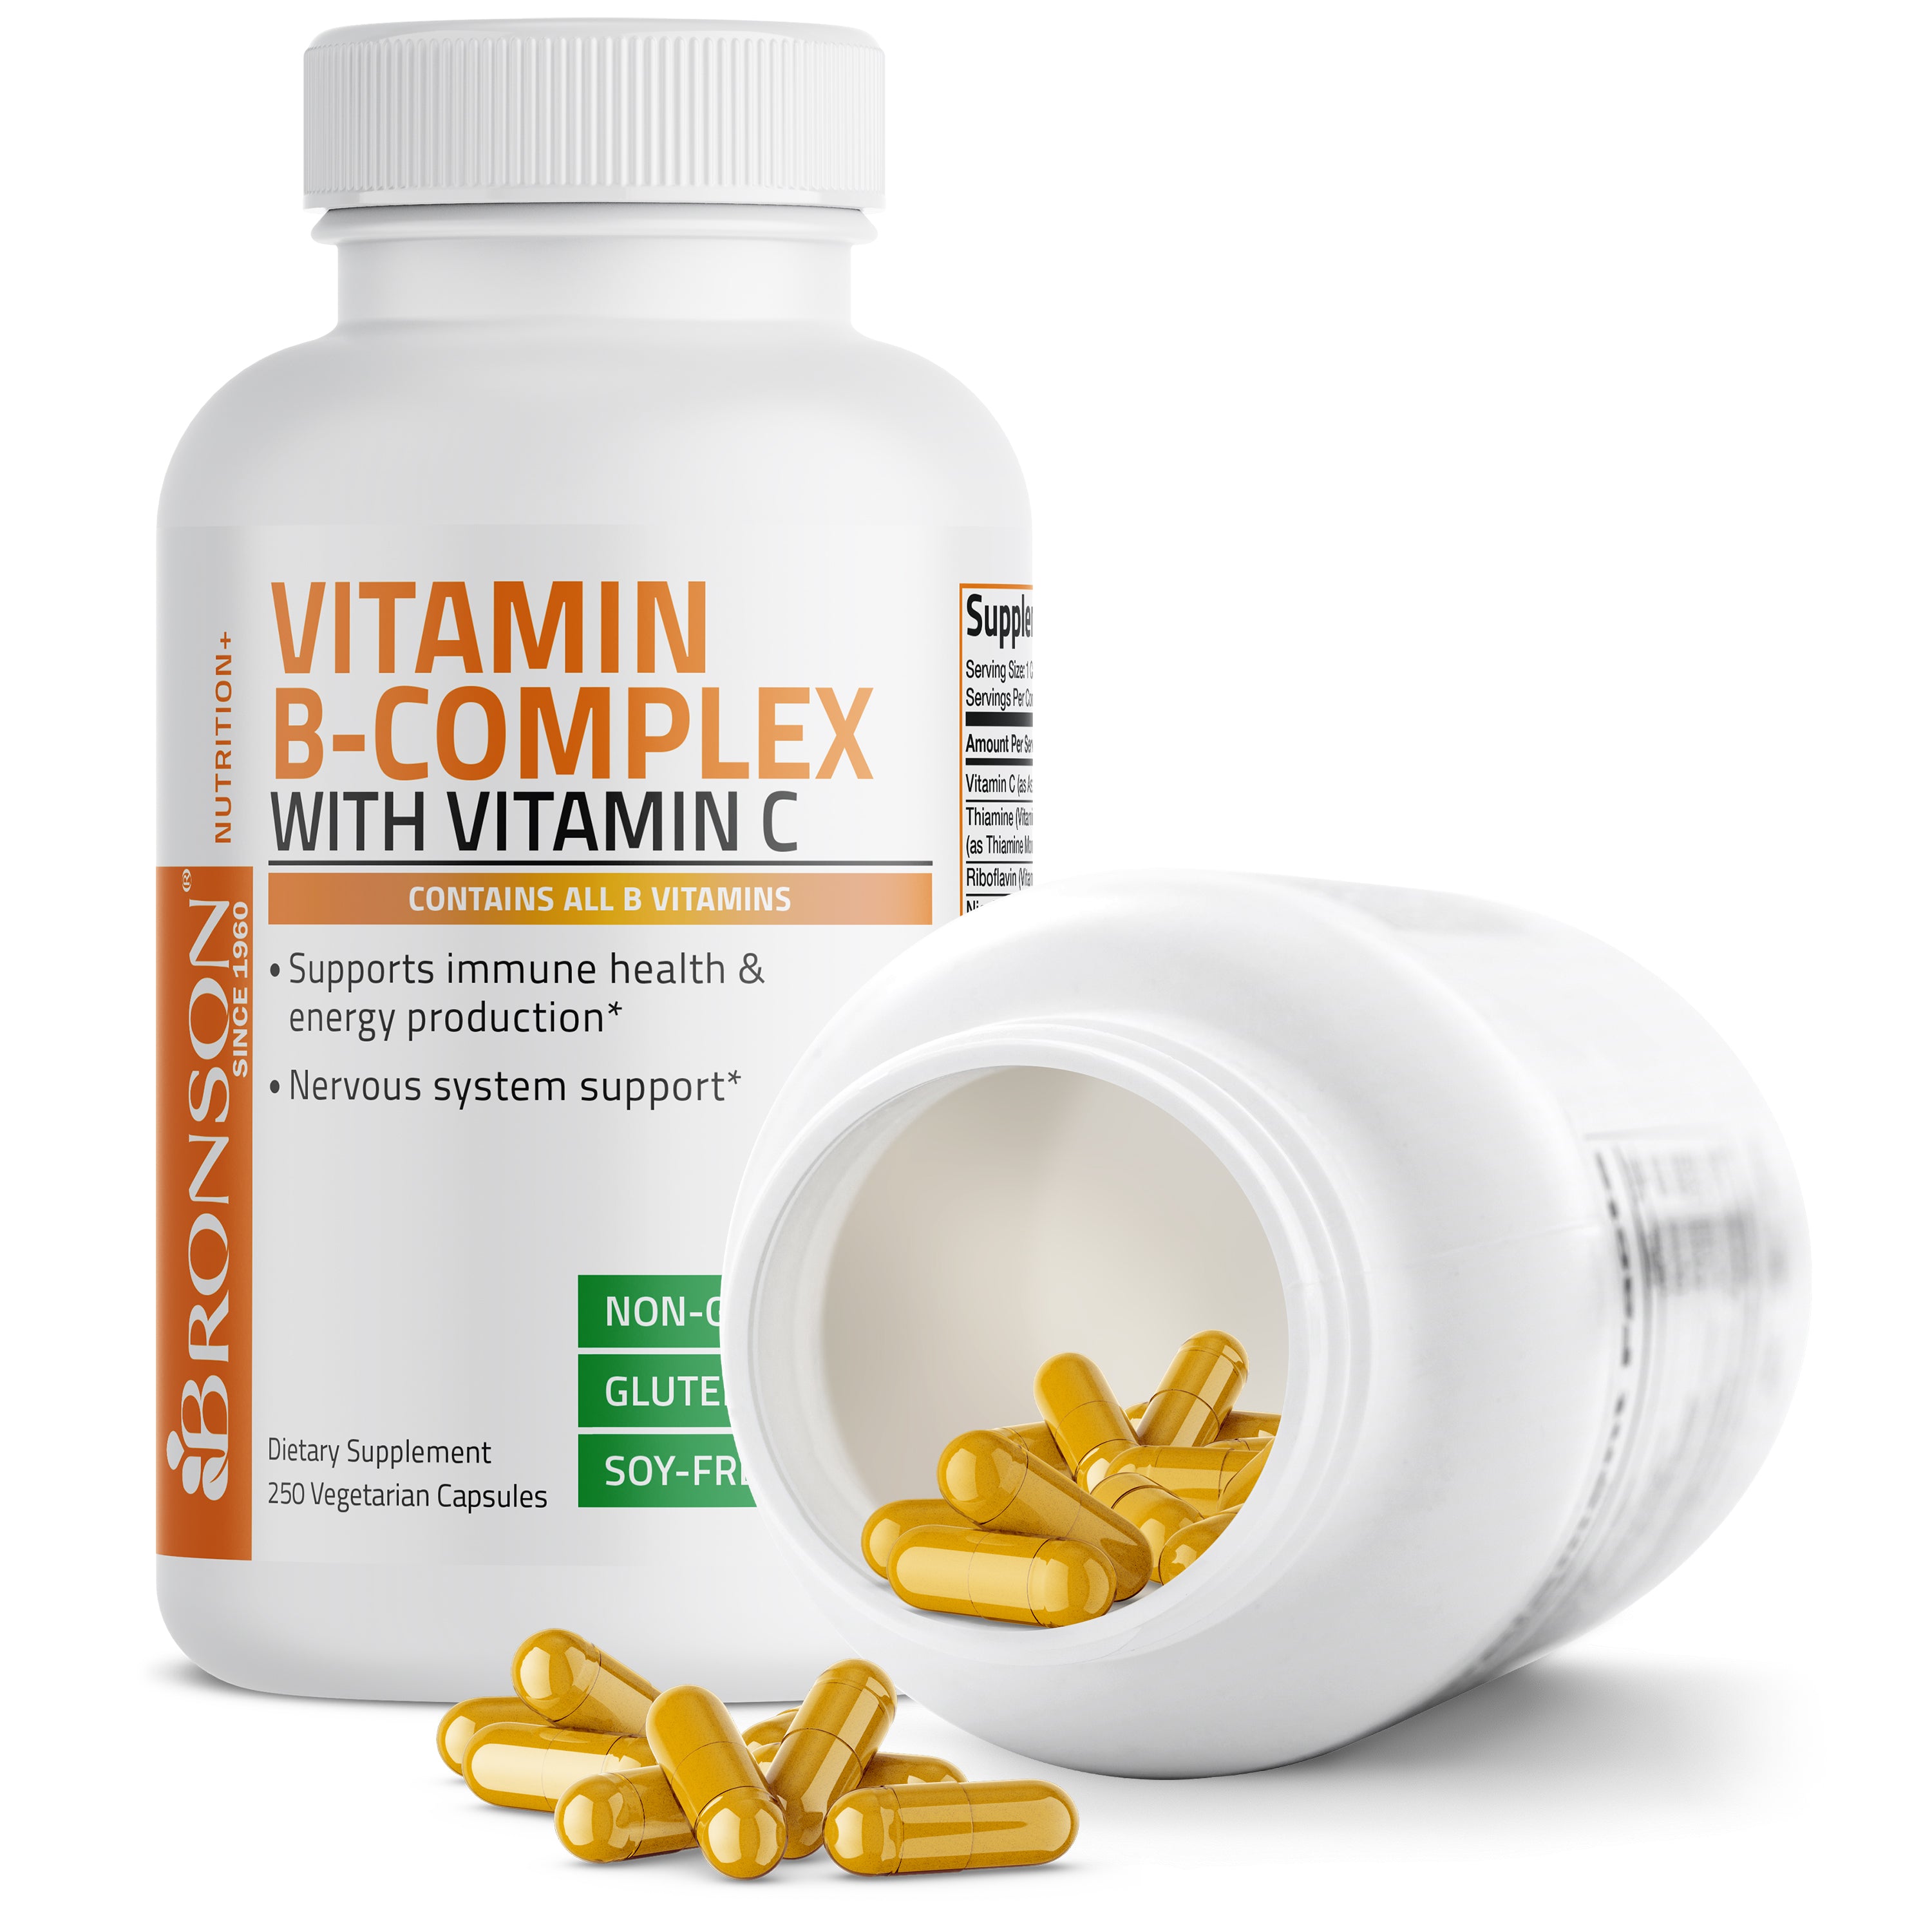 Vitamin B Complex with Vitamin C view 4 of 6